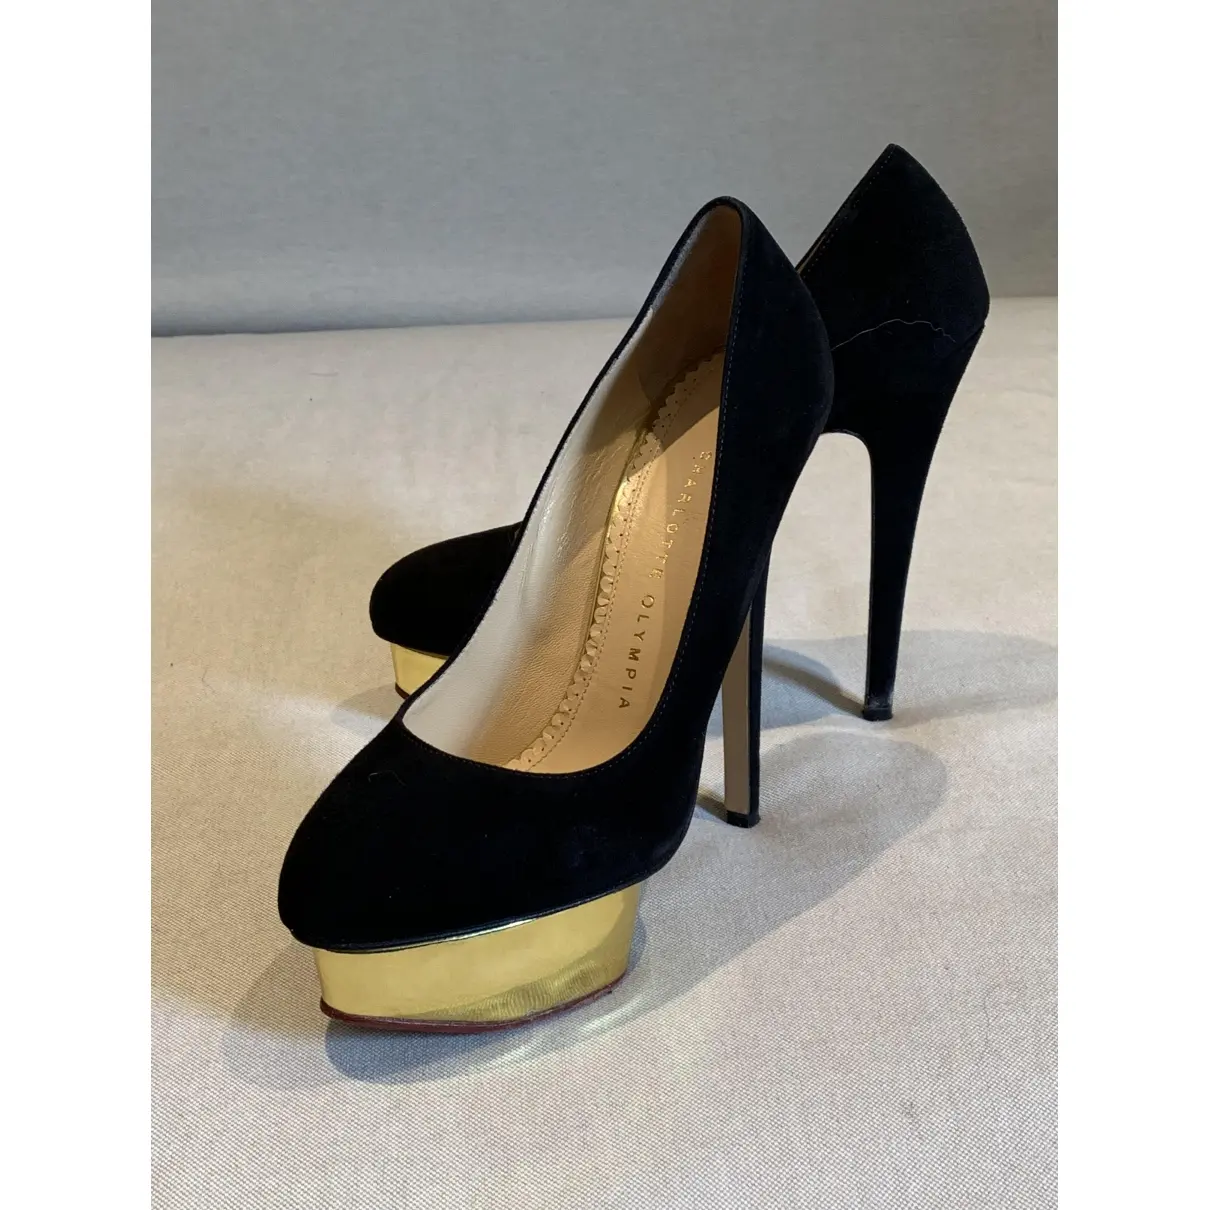 Buy Charlotte Olympia Debbie velvet heels online